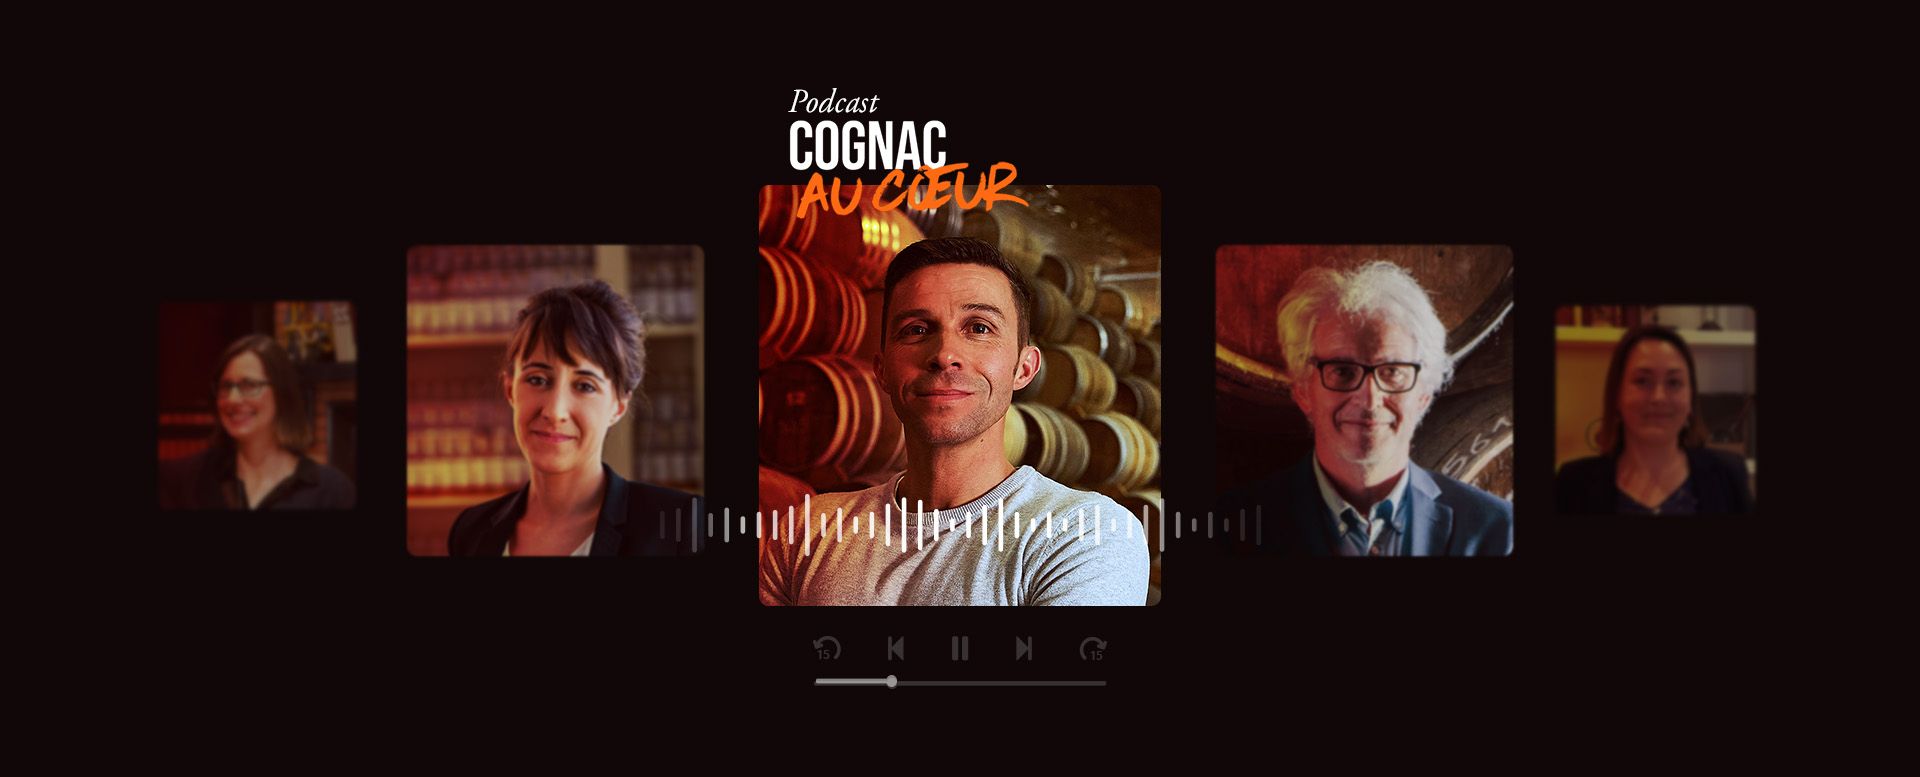 ptojet-cognac-1080x1920 - podcast.jpg